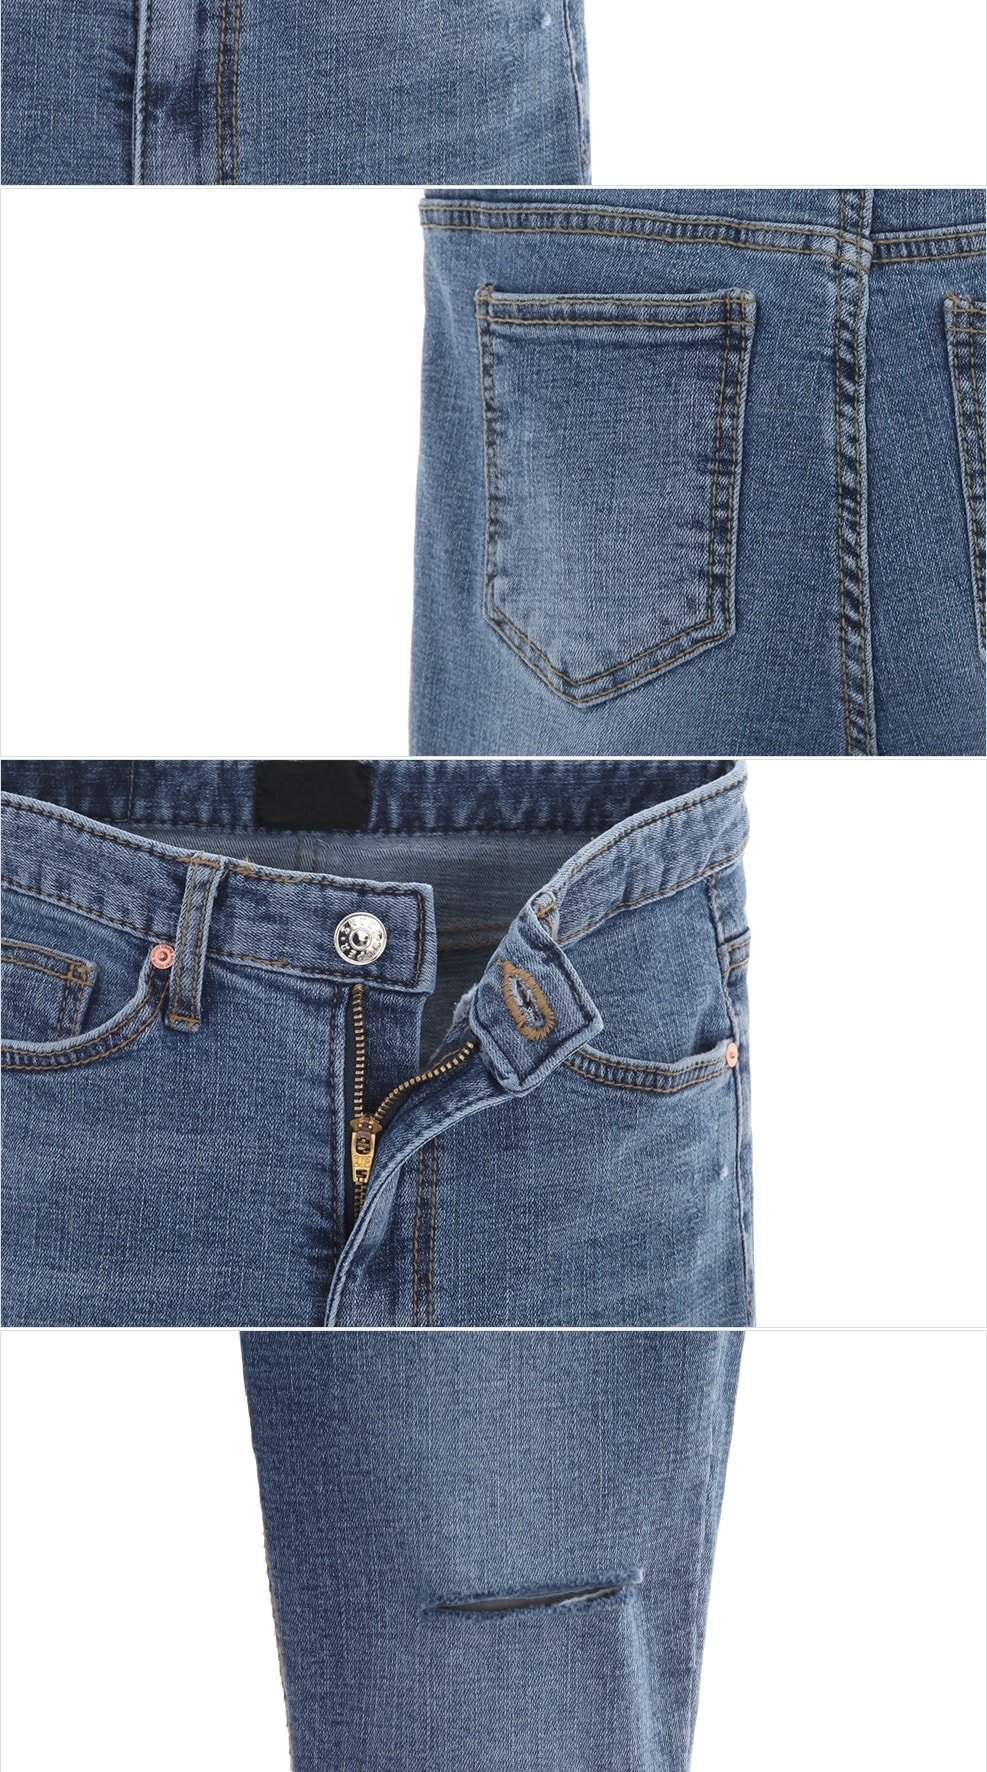 jeans Blue(model) 27